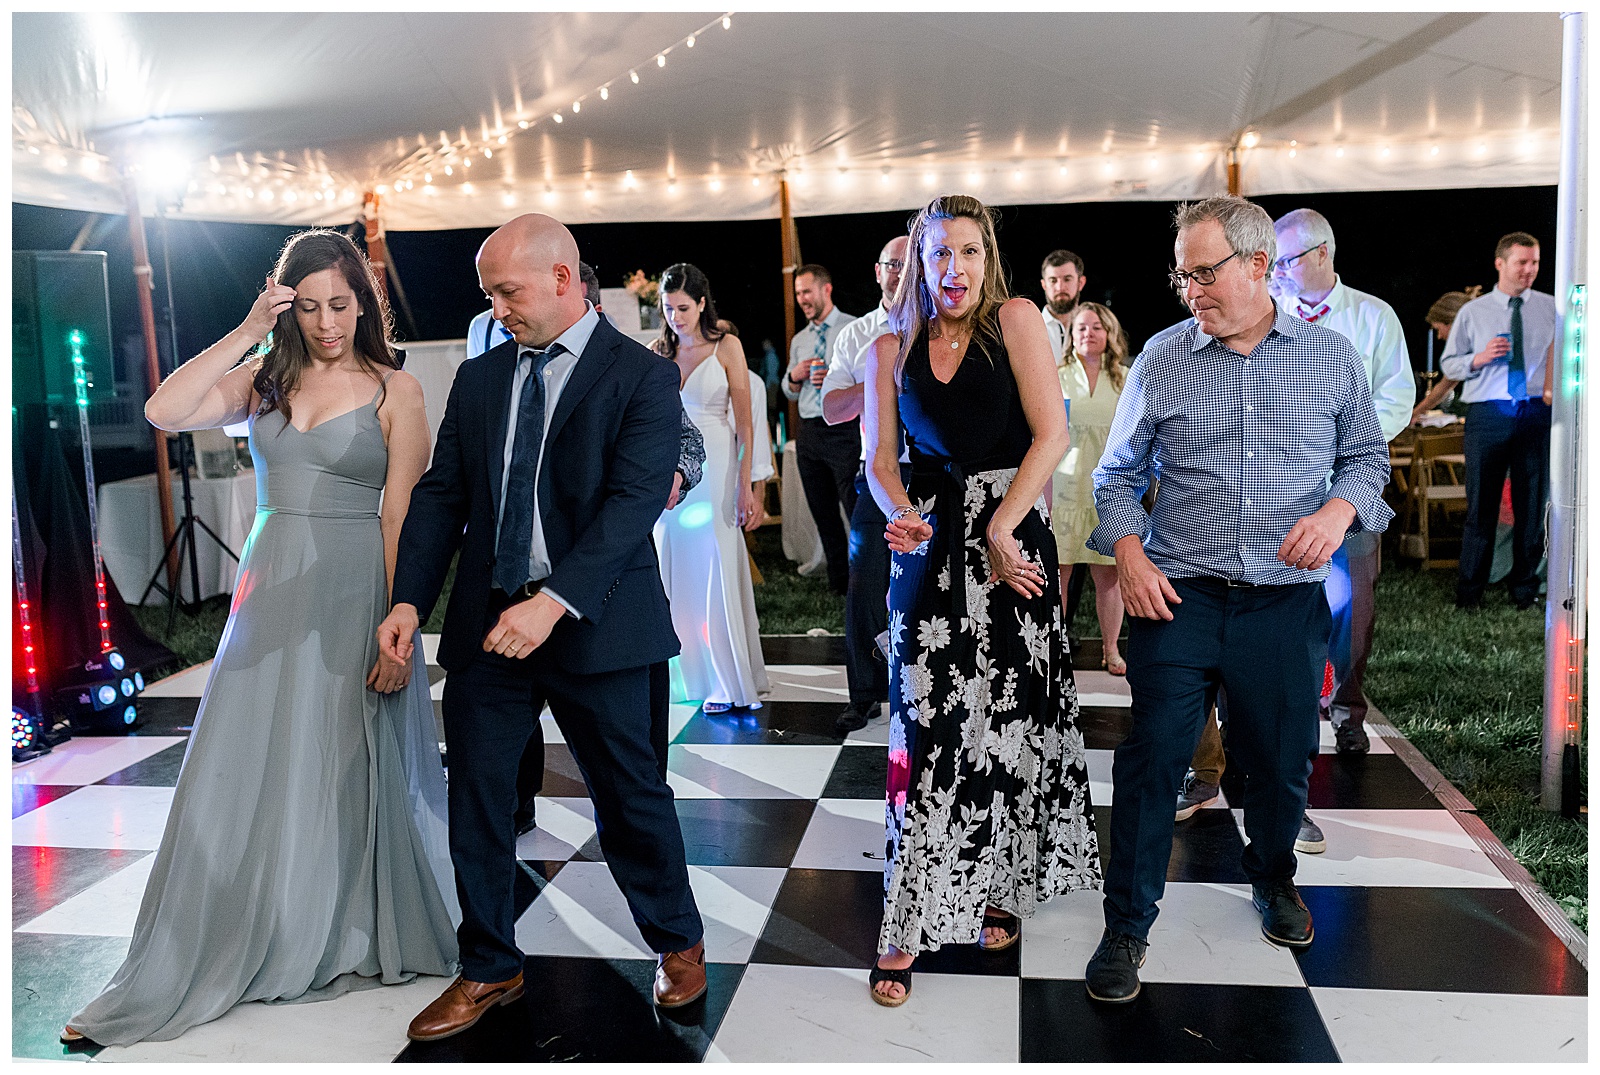 people dancing at wedding reception at preserve at dundee
